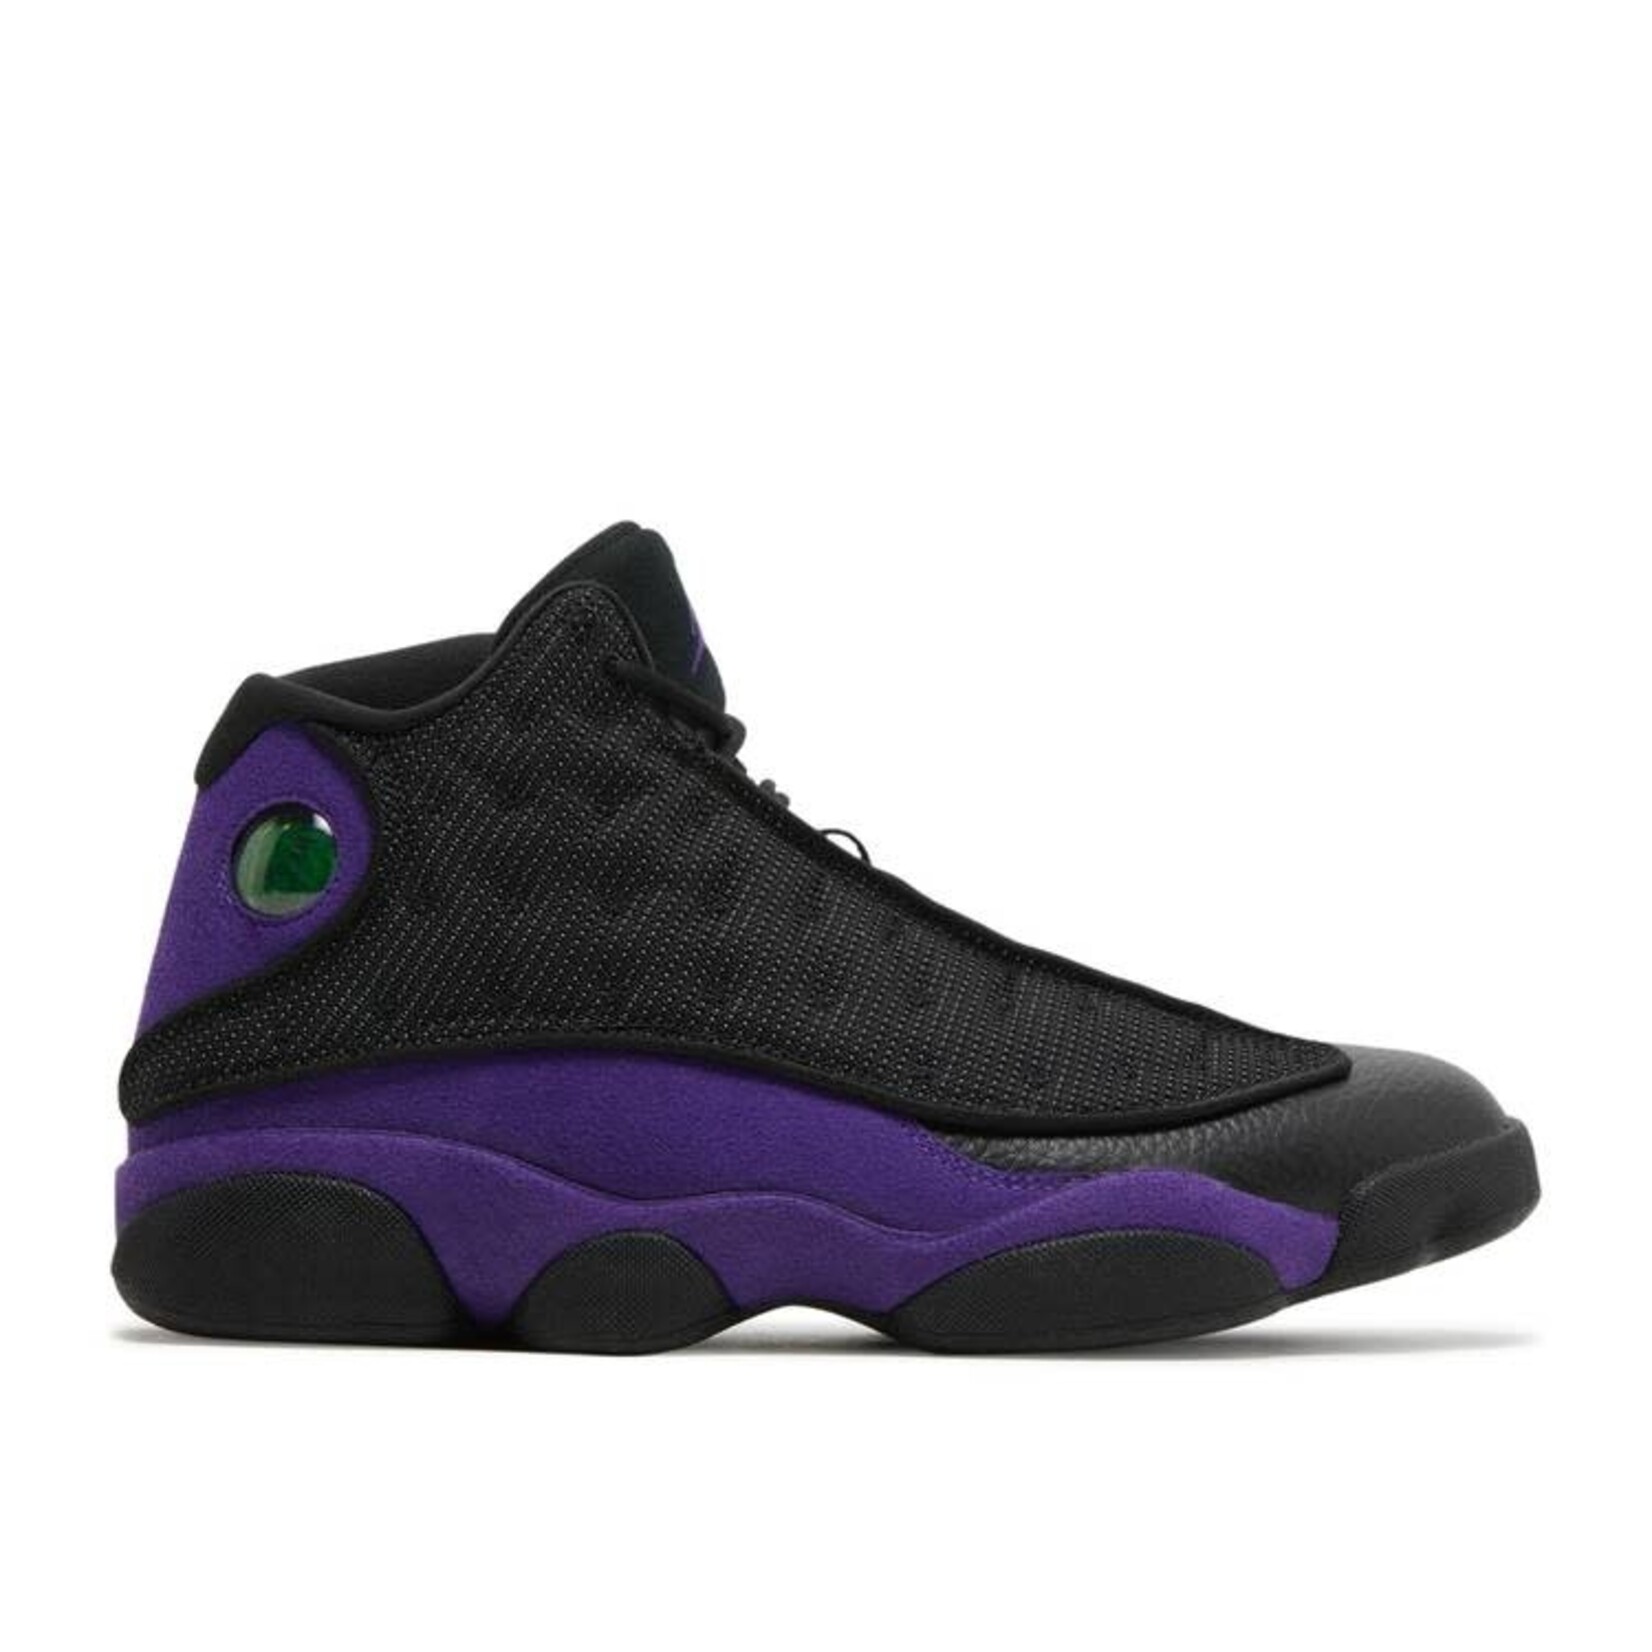 Jordan Jordan 13 Retro Court Purple Size 10.5, DS BRAND NEW HALF BOX